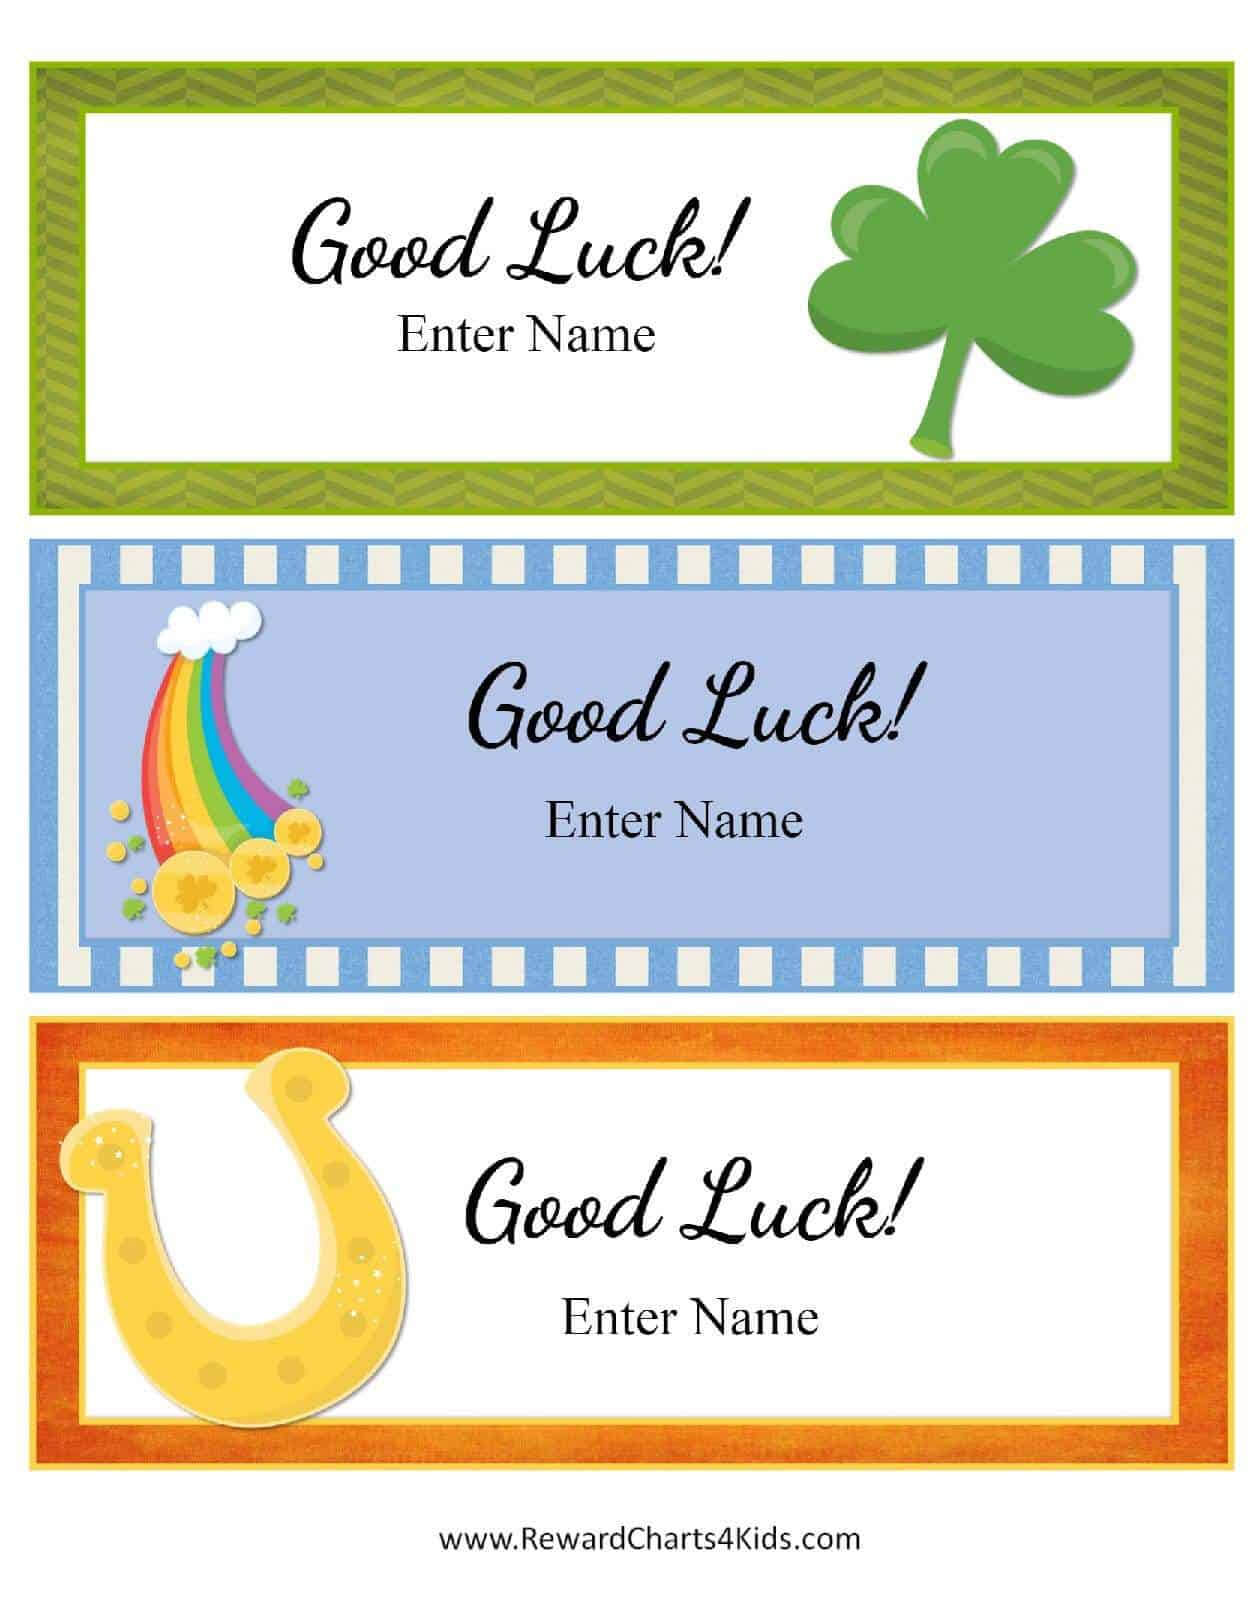 Free Good Luck Cards For Kids | Customize Online & Print At Home Regarding Good Luck Card Templates